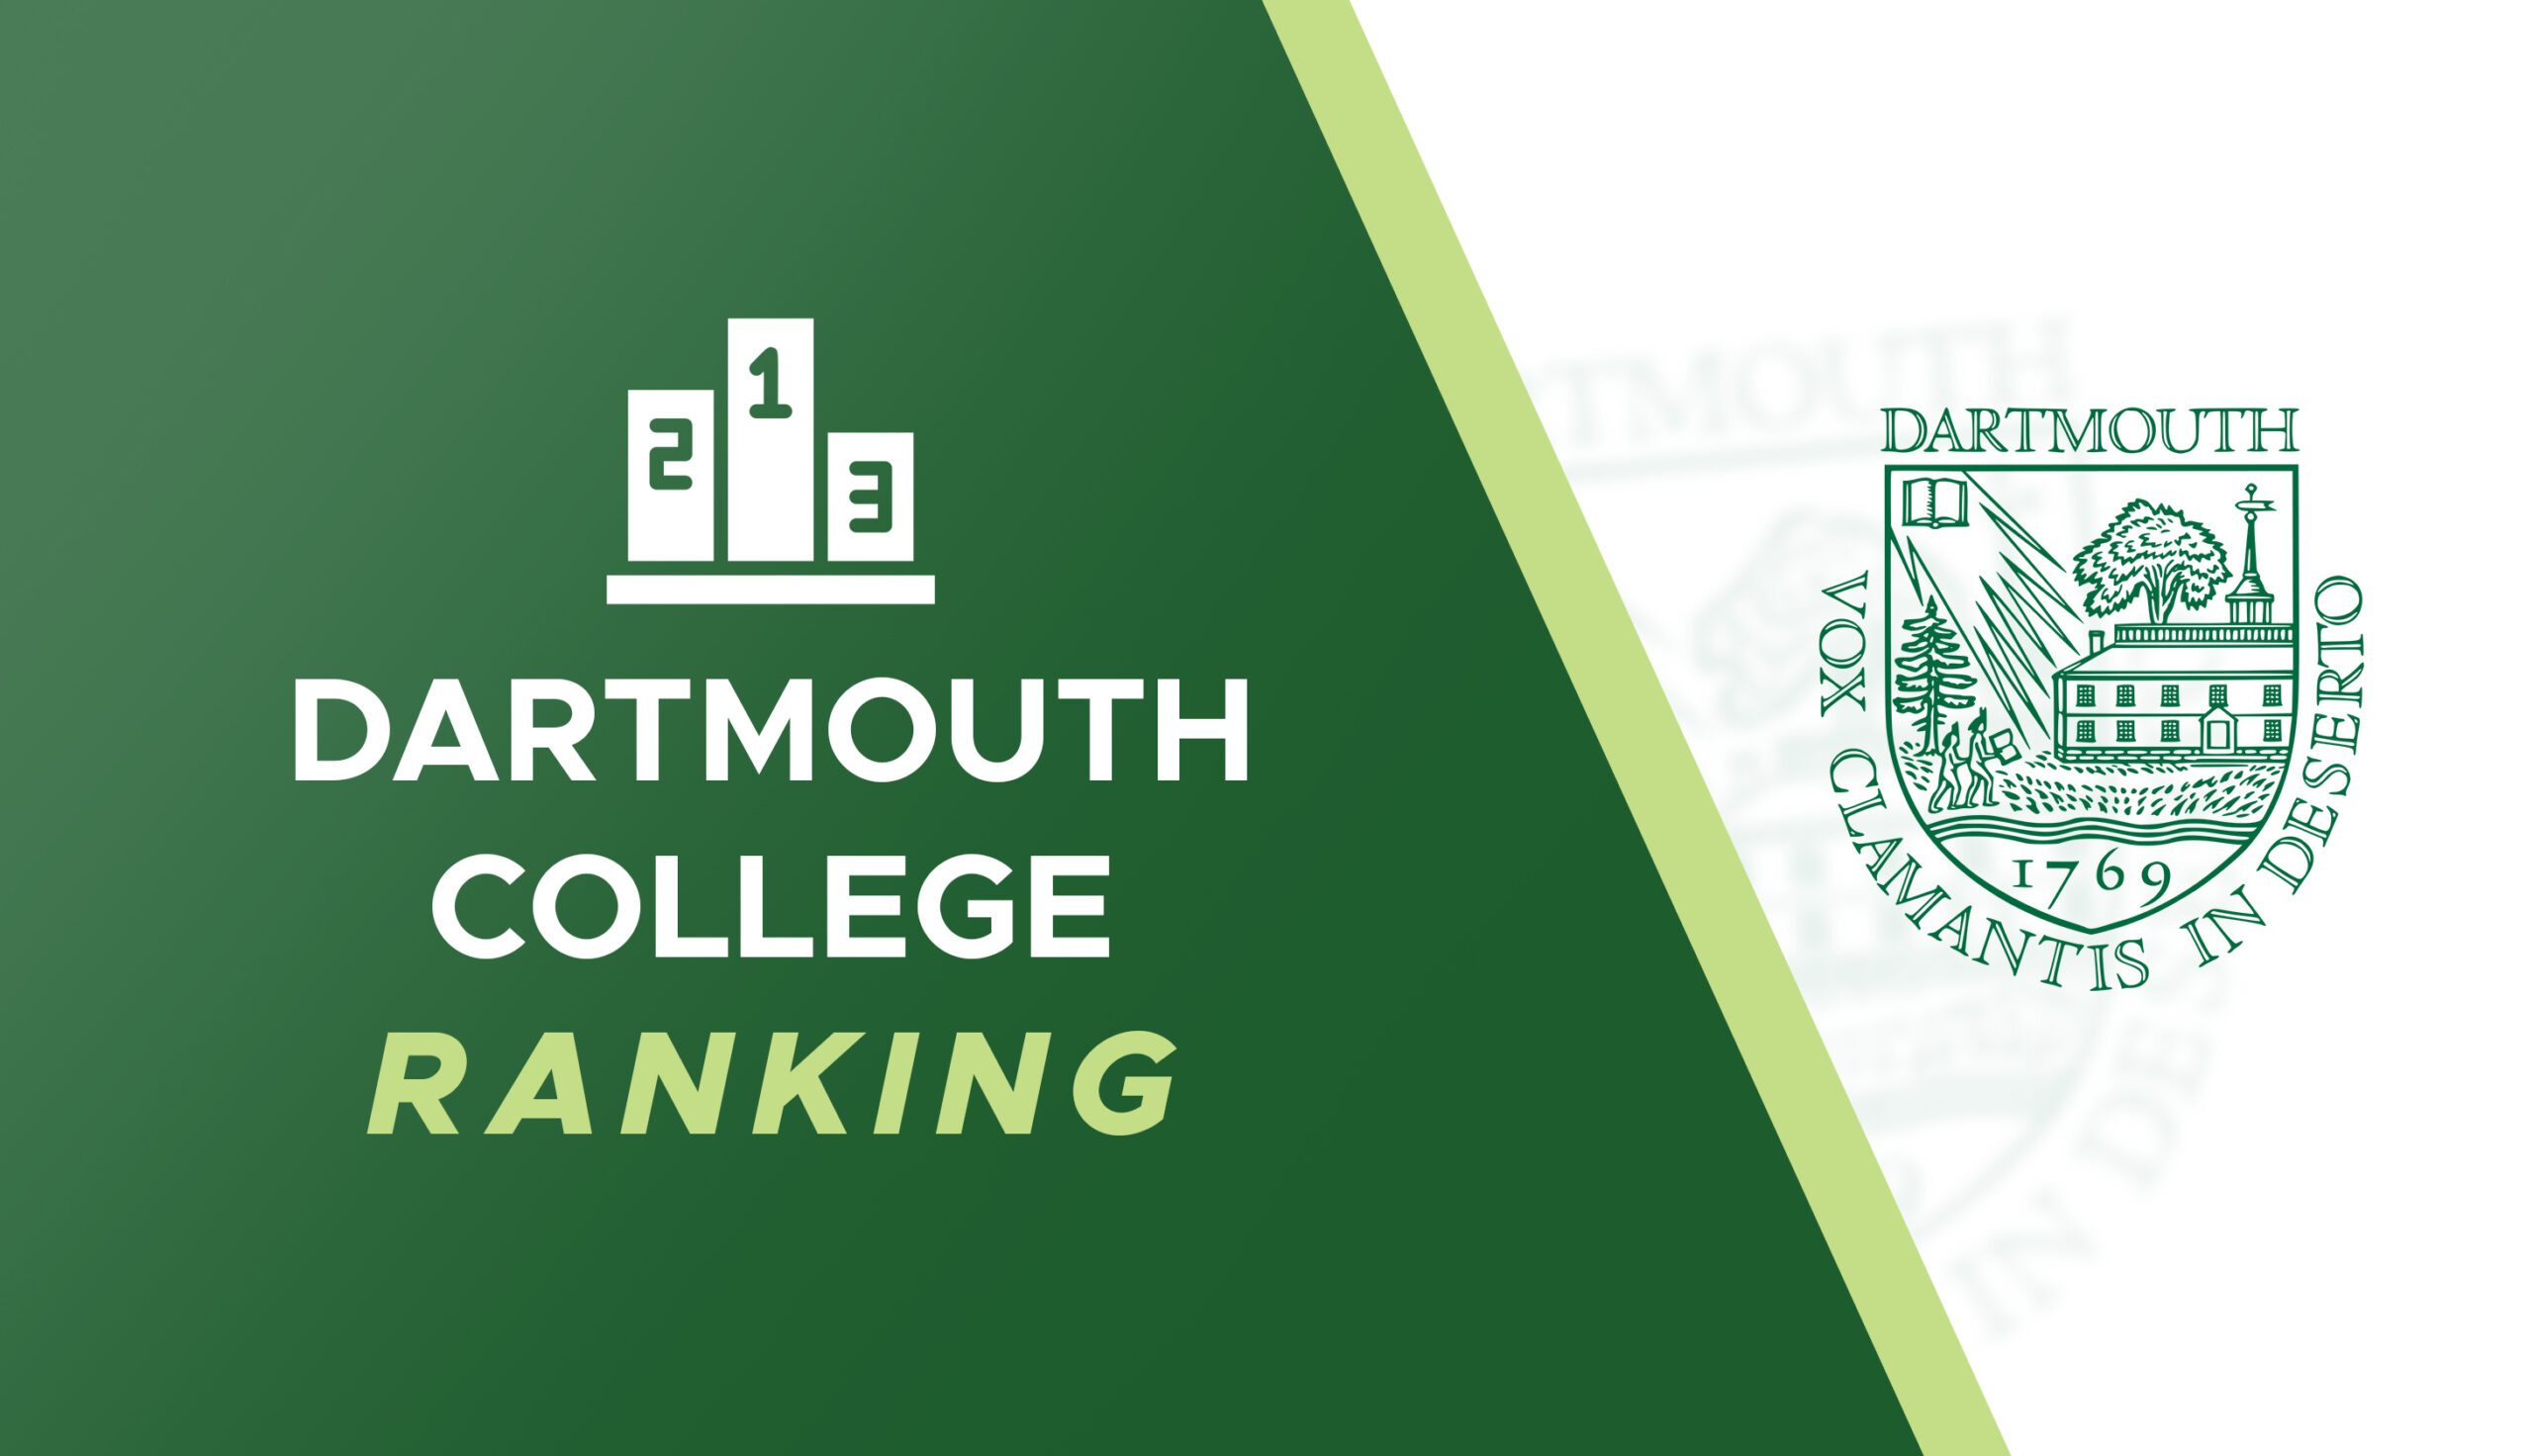 Dartmouth Ranking & Dartmouth College Ranking Expert Guide